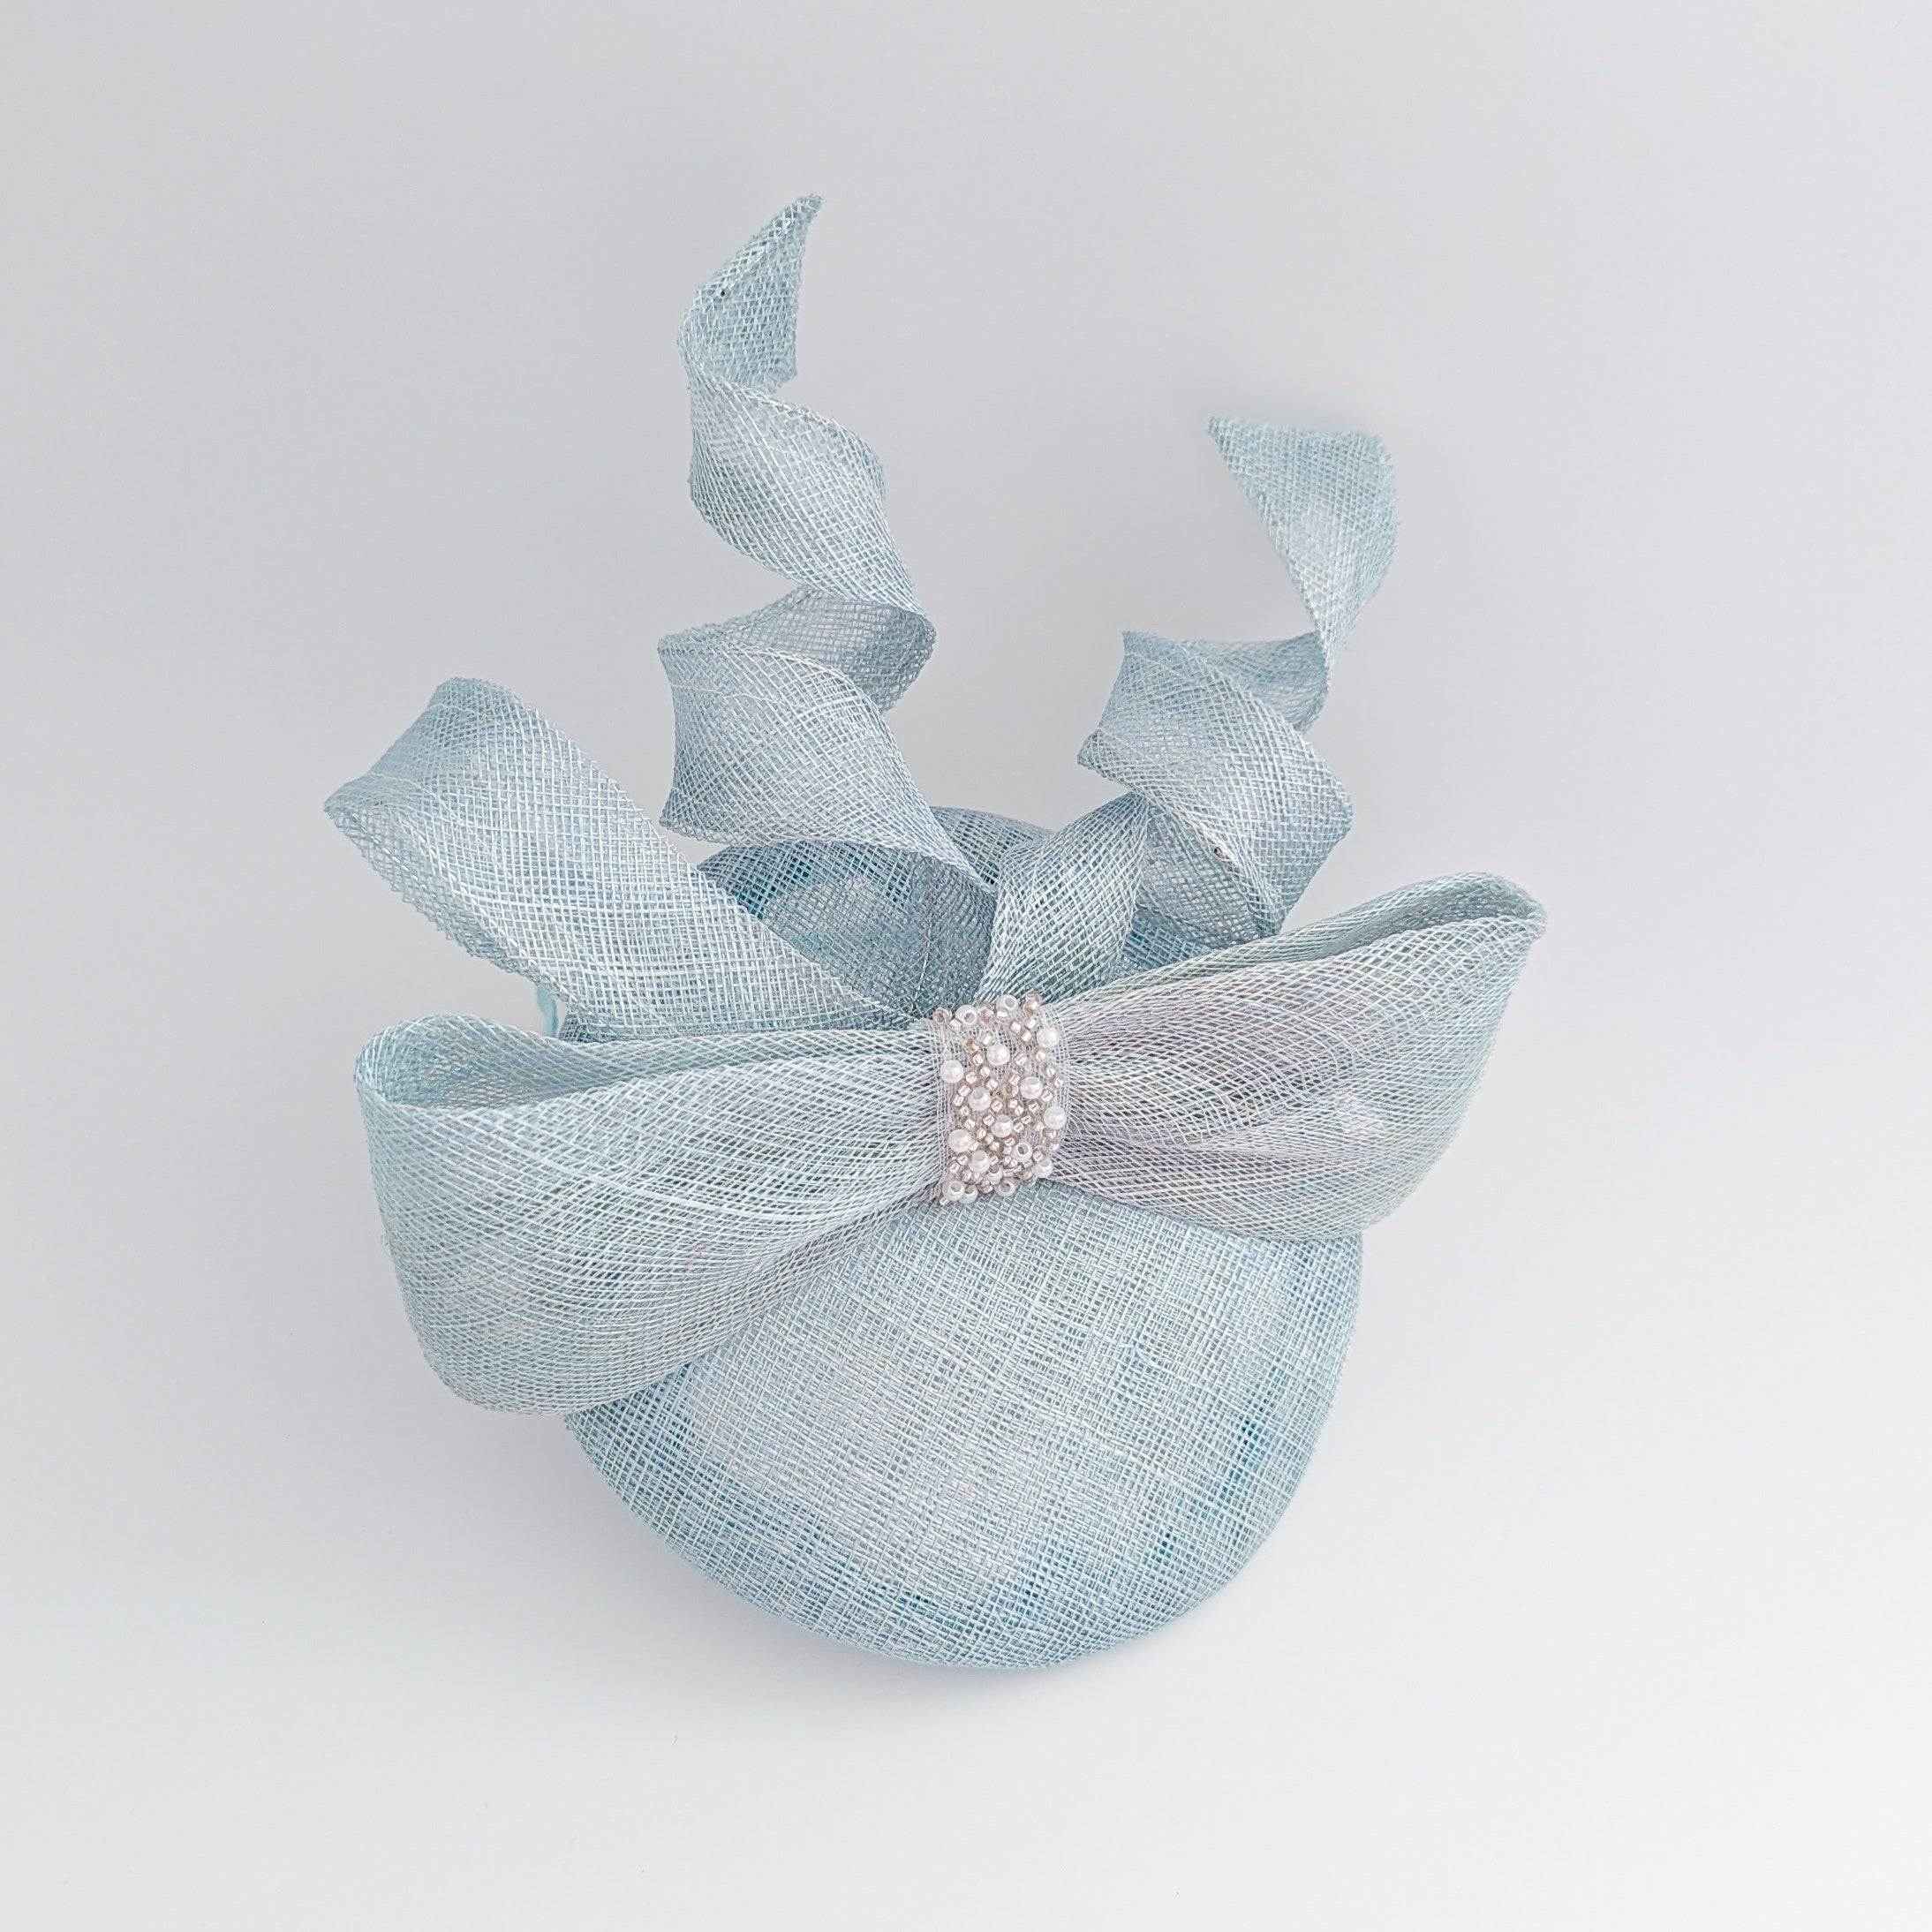 Aquamarine blue crystal bow fascinator hat